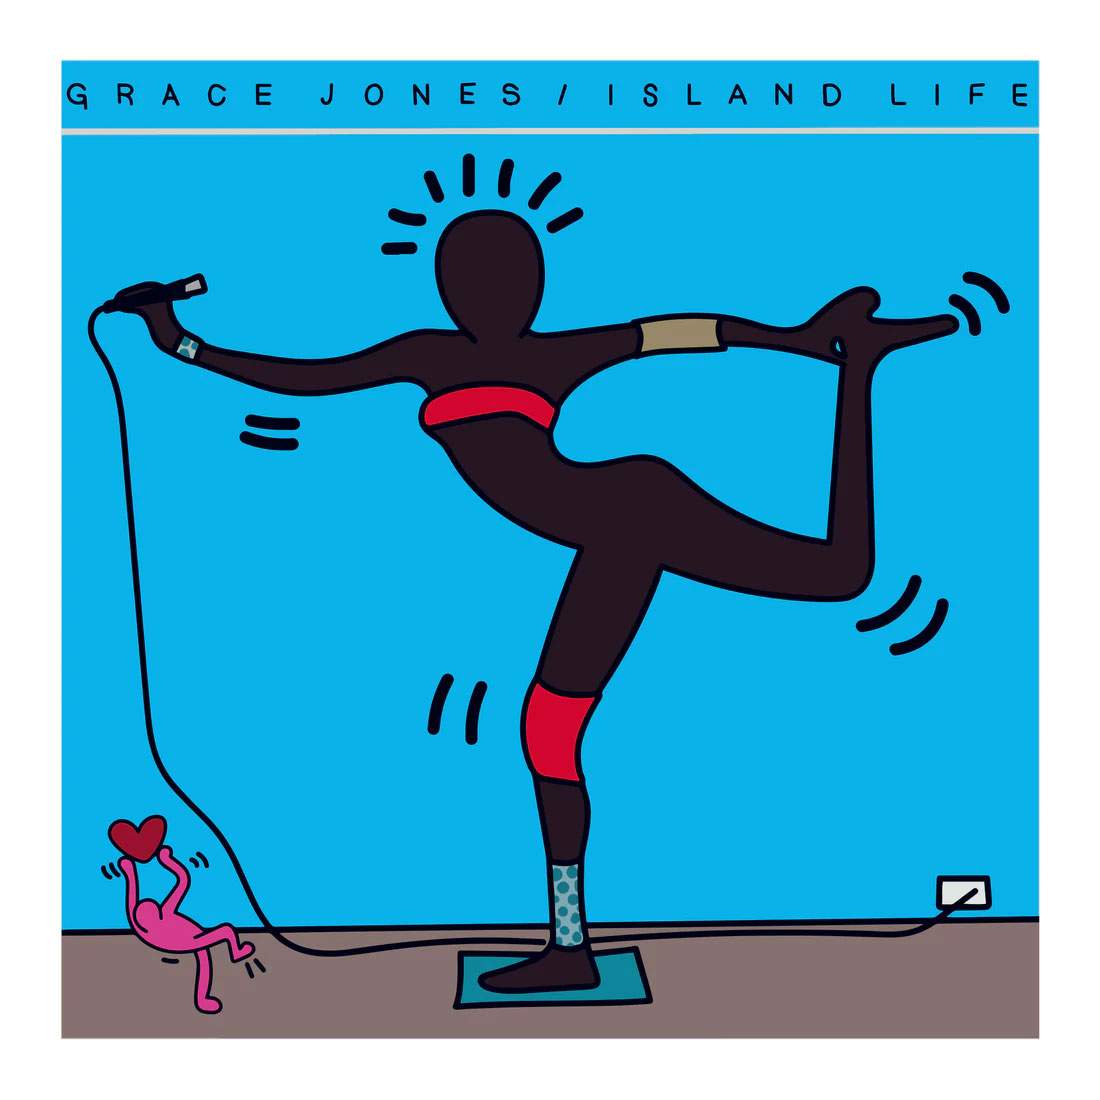 Grace jones island life album cover TBOY artist Keith haring artwork painting